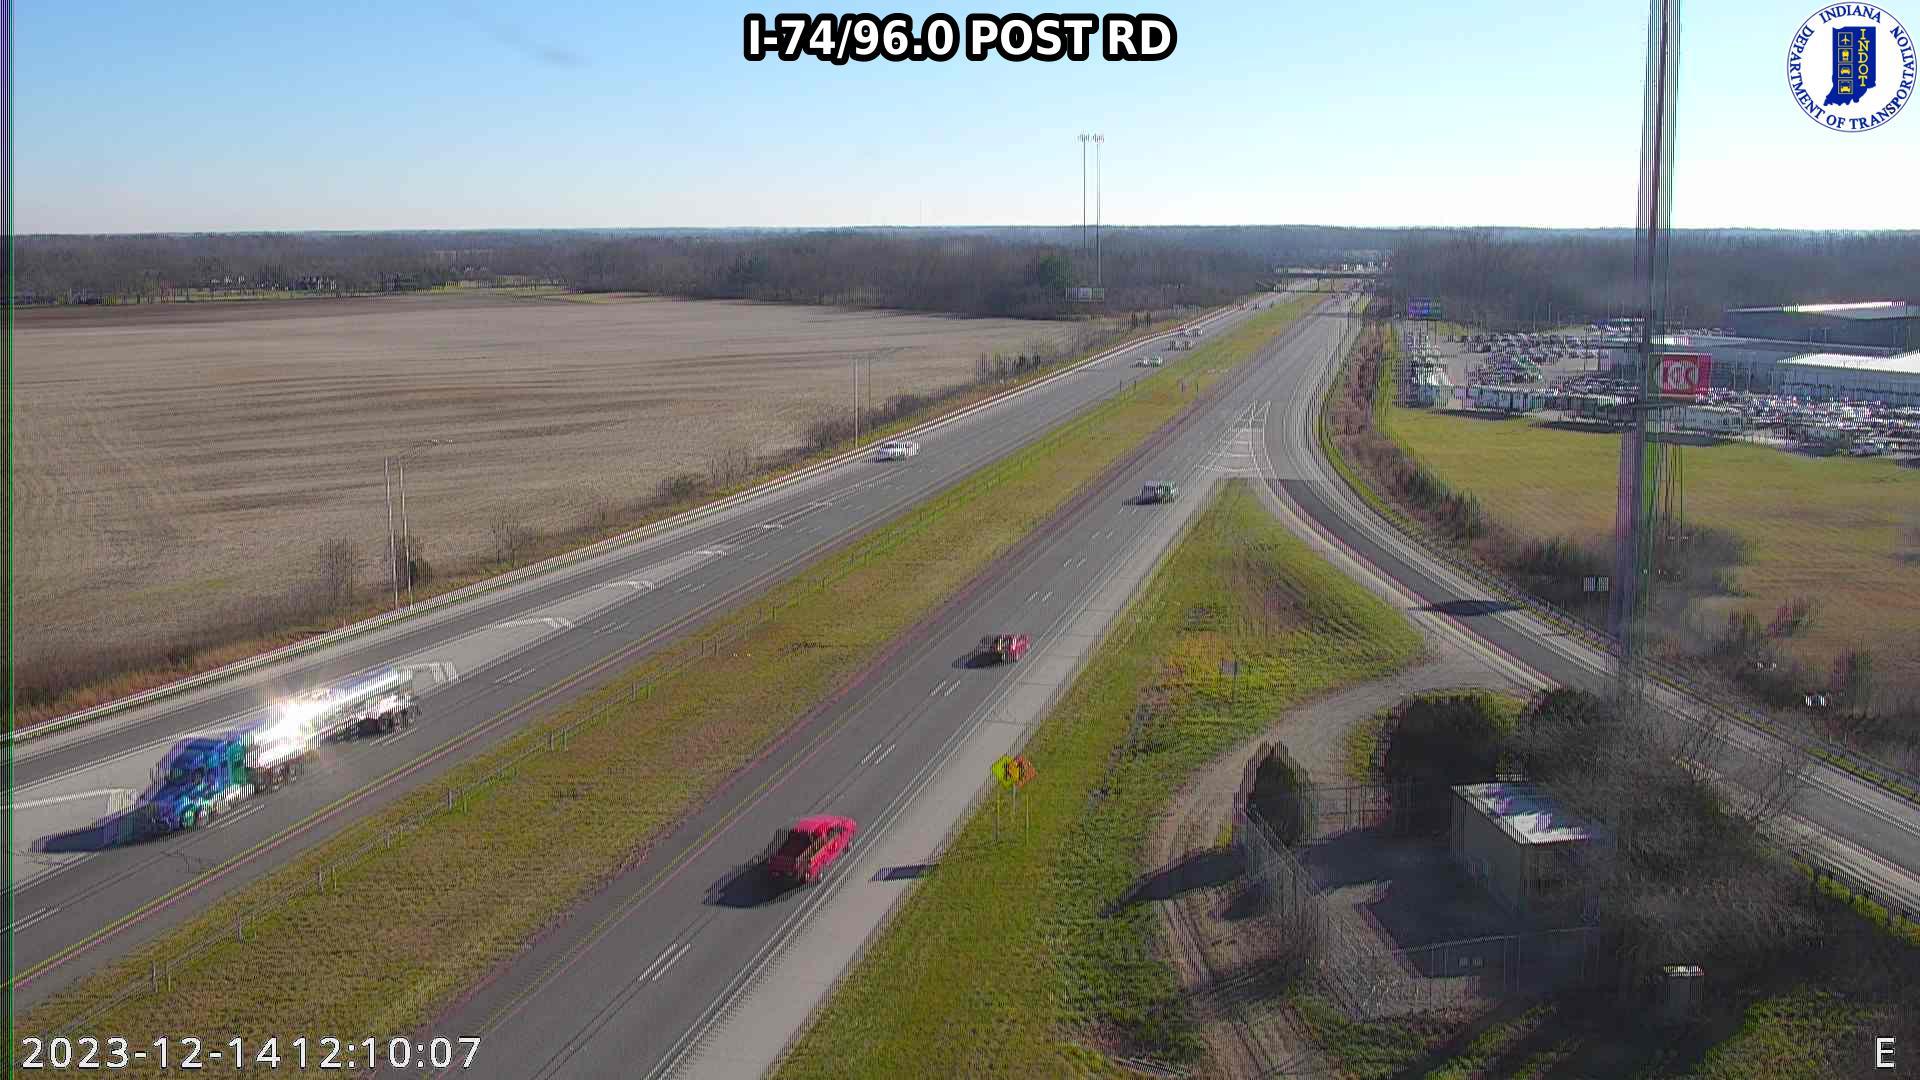 Wanamaker: I-74: I-74/96.0 POST RD : I-74/96.0 POST RD Traffic Camera